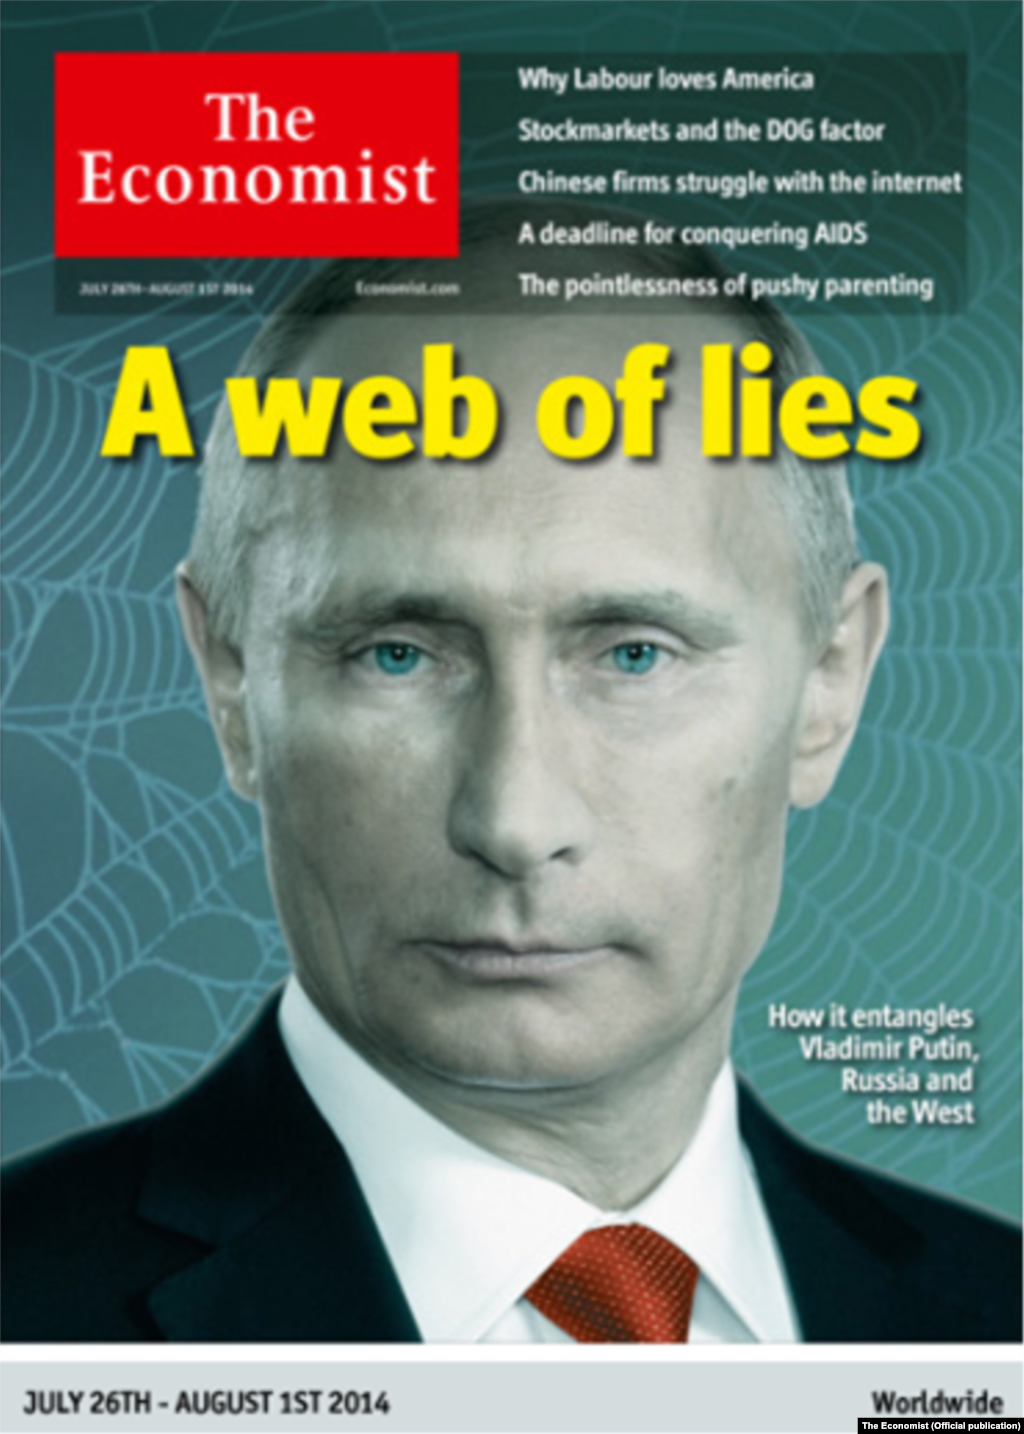 &quot;The Economist&quot; pictures Putin entangled in a &quot;web of lies.&quot;